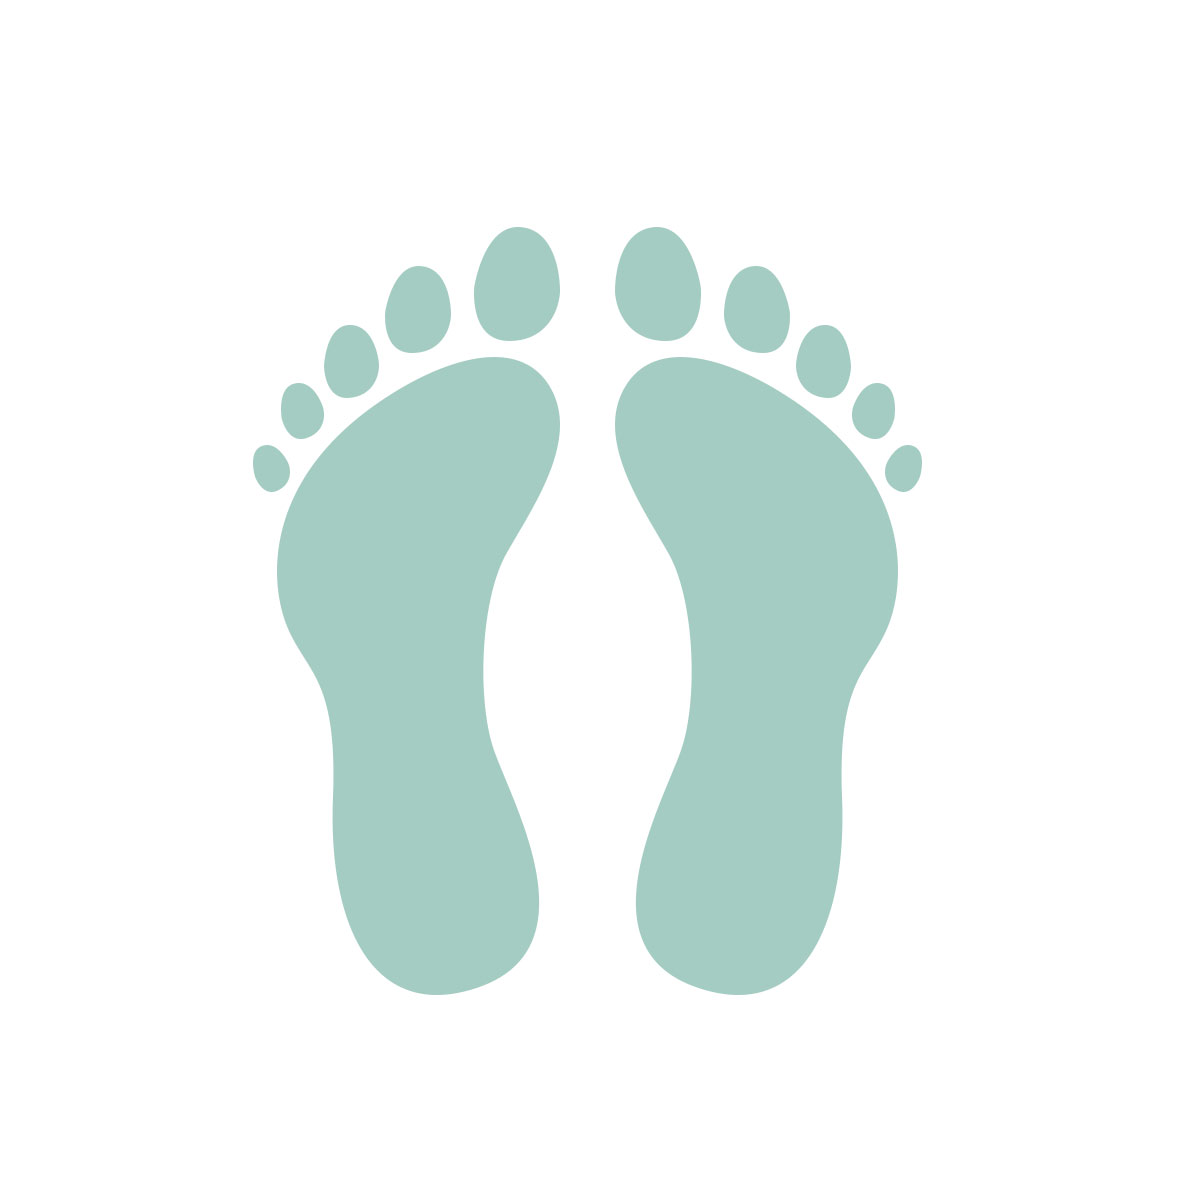 Gawler Balaklava Podiatry Foot Care and Feet Fixes 